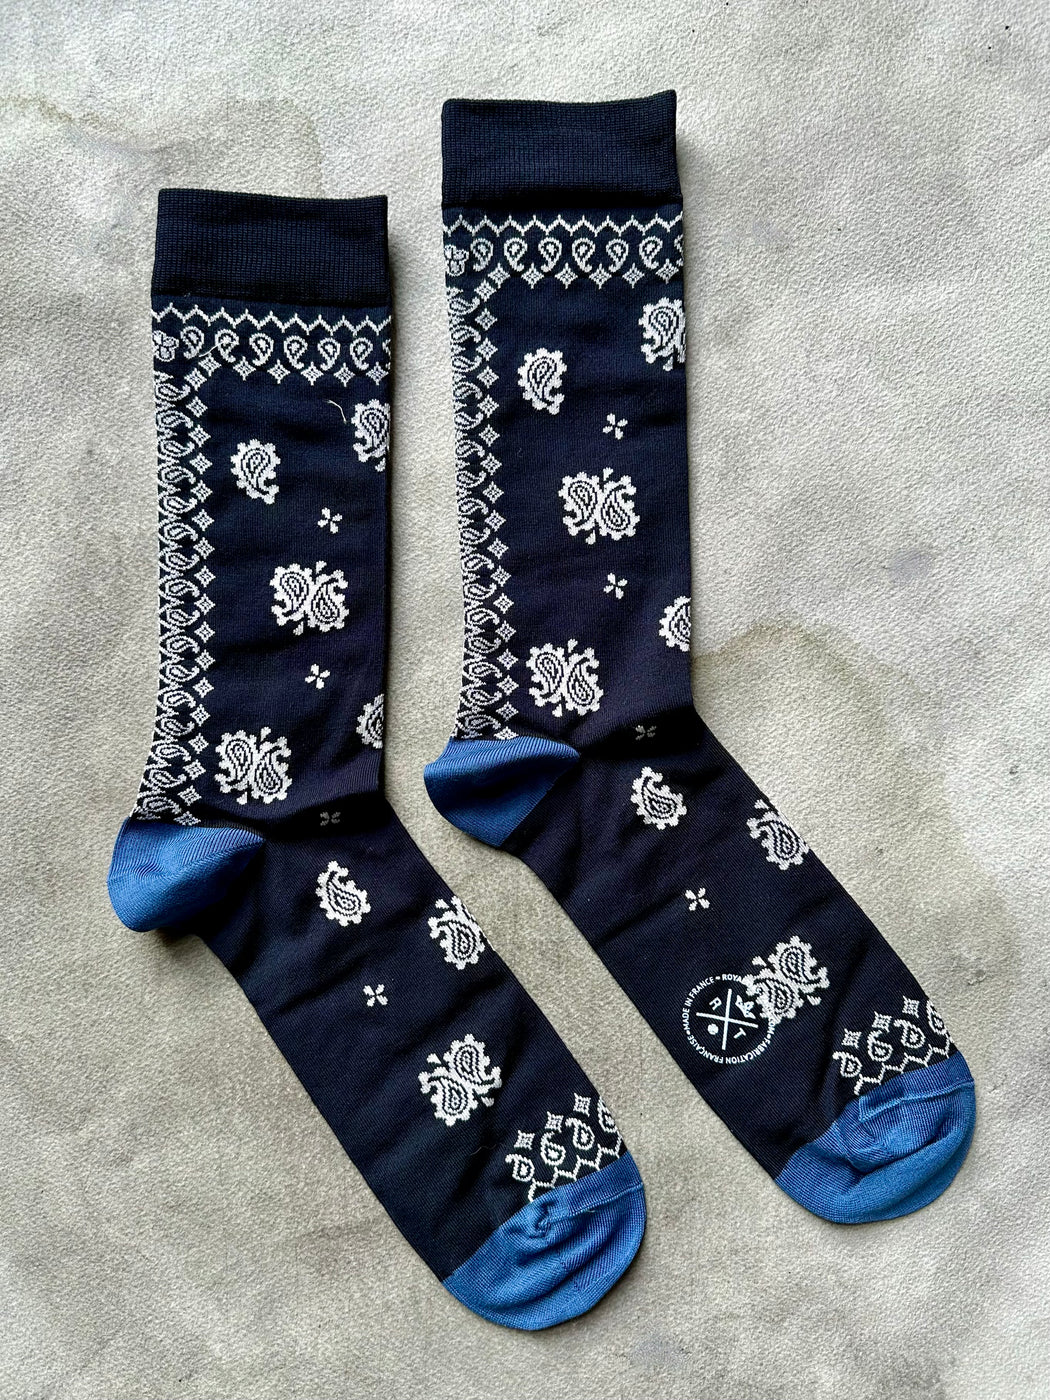 Royalties Paris Socks for Men - Black Bandana